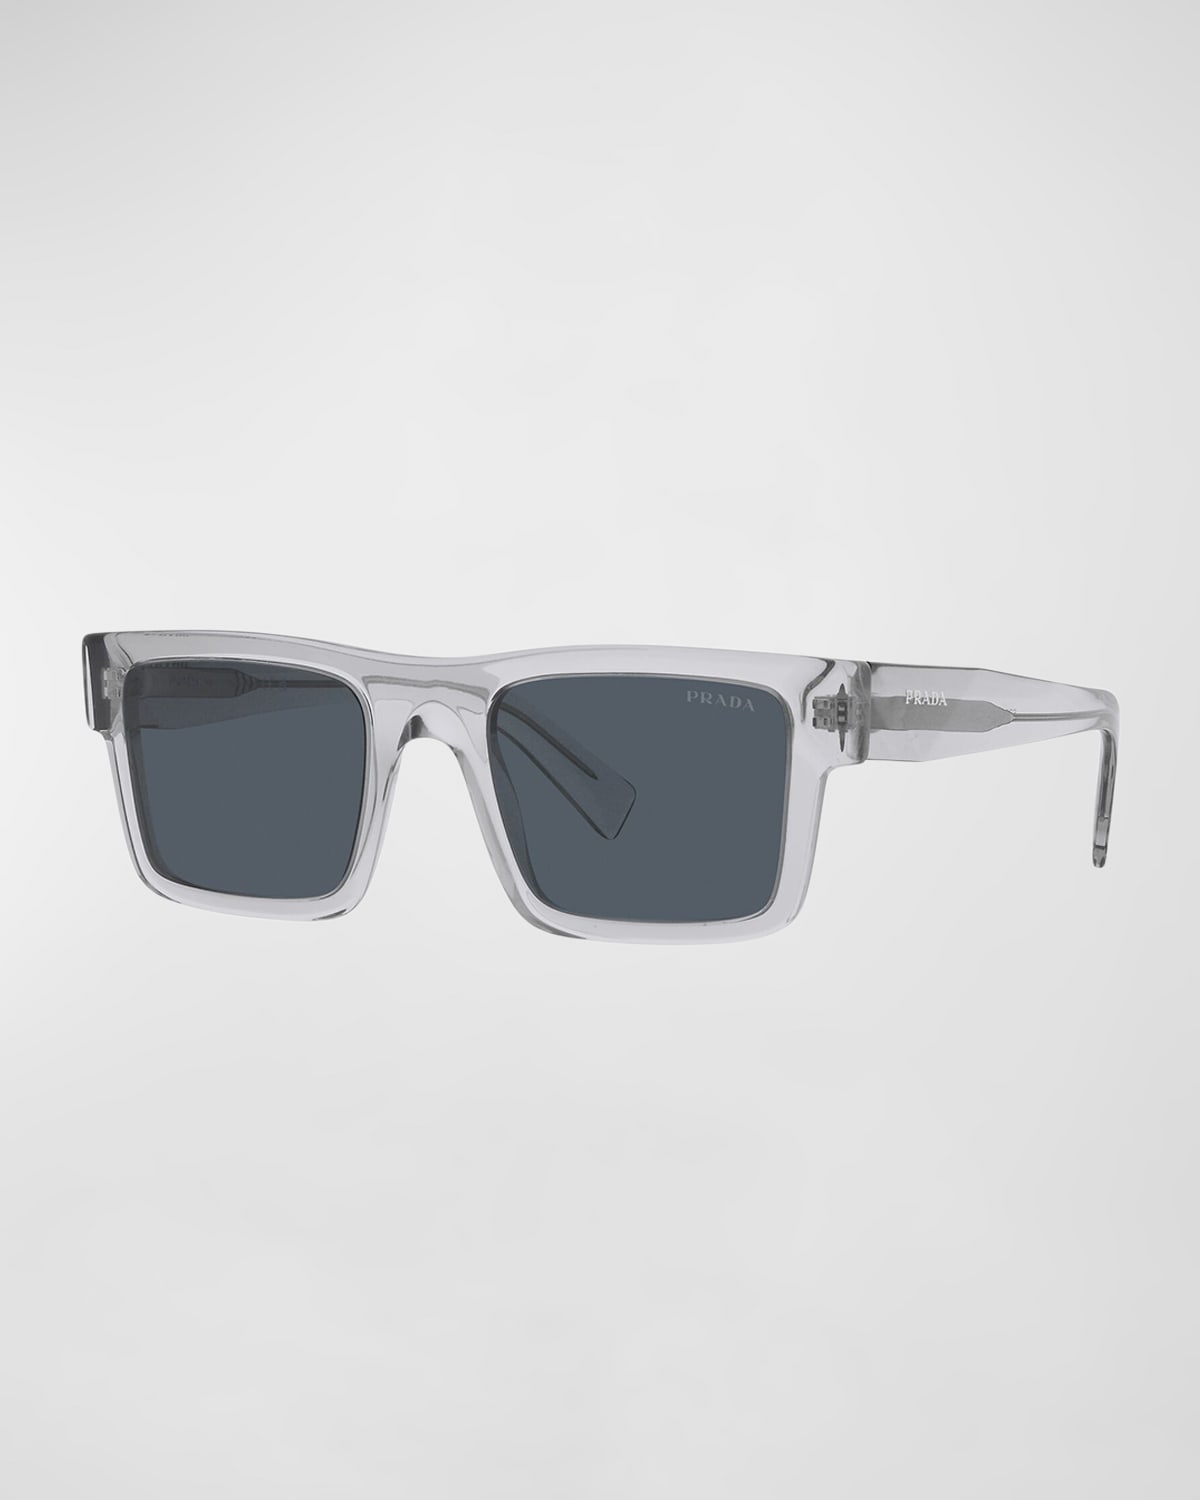 Prada Men's Square Acetate Sunglasses In Shiny Gunmetal